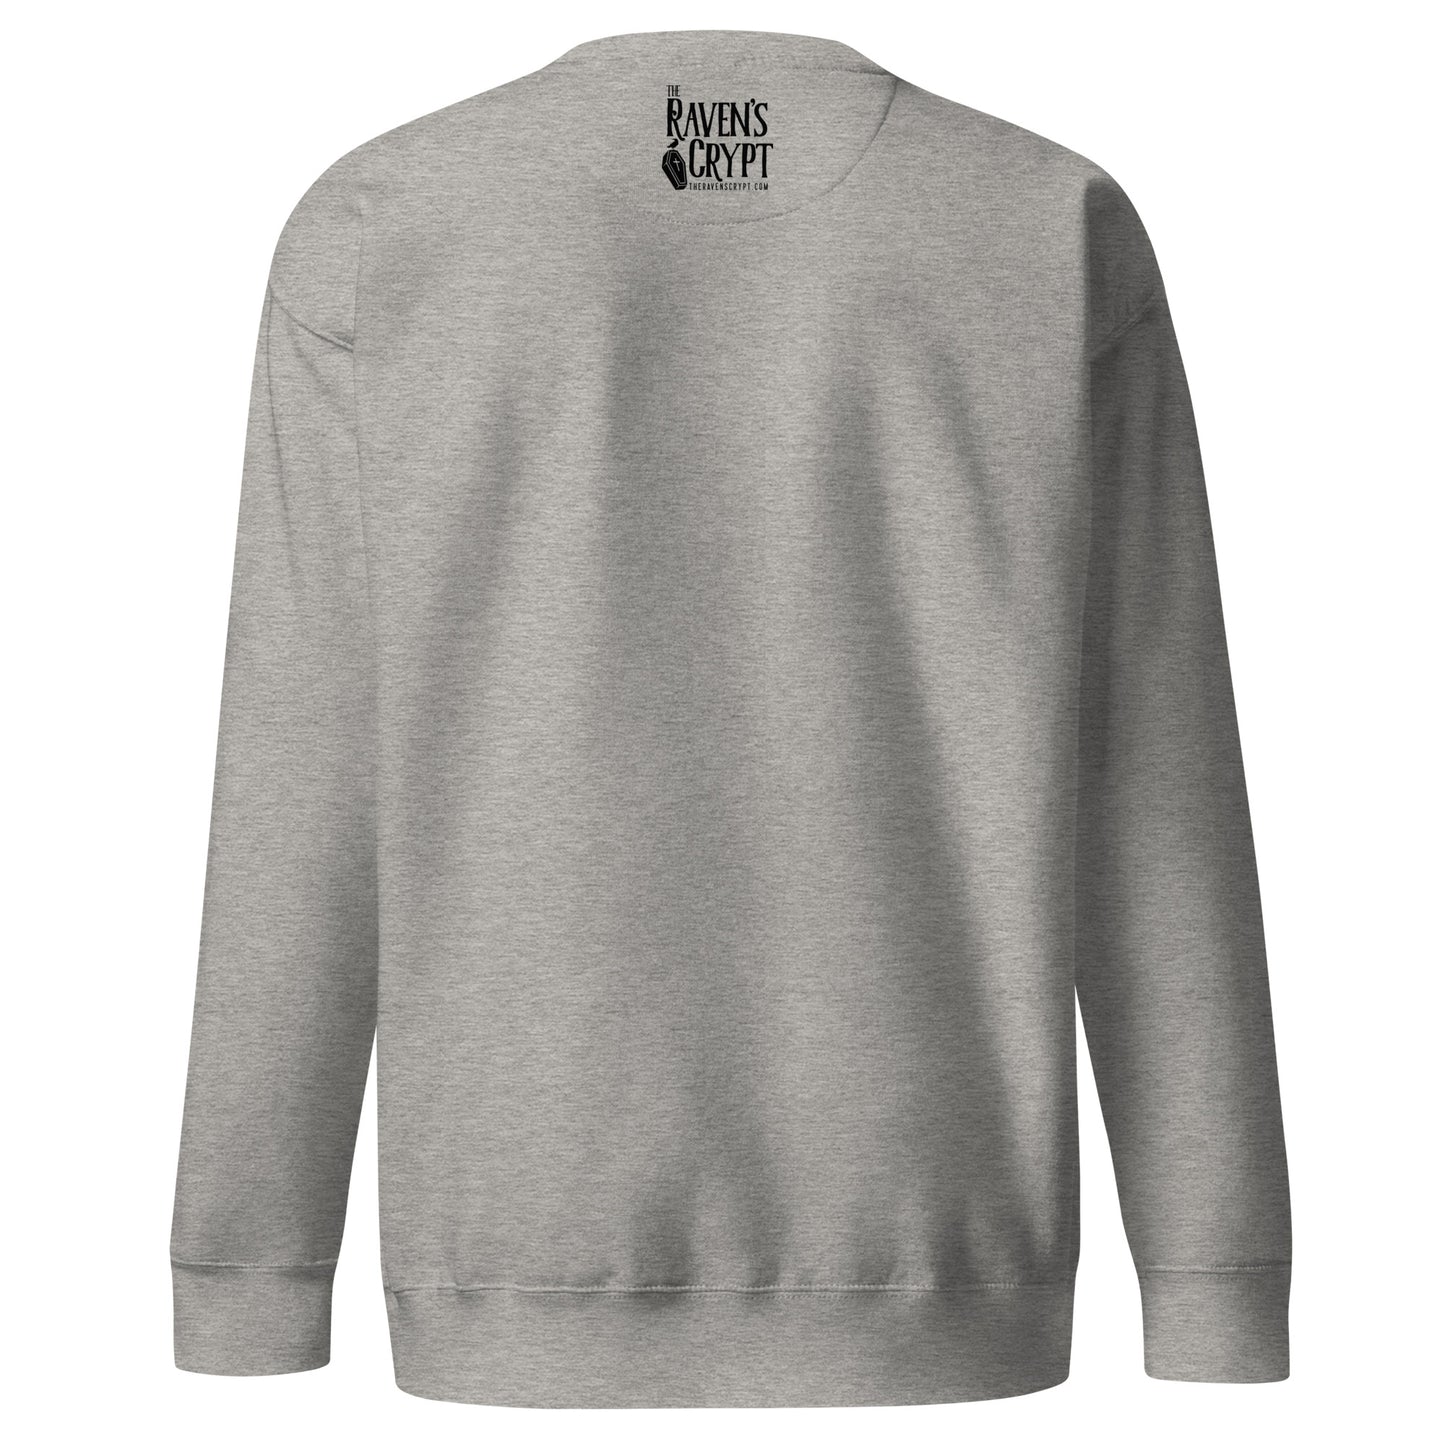 Men's Edgar Allan Poe "Poe" Unisex Premium Sweatshirt - Carbon Grey Back